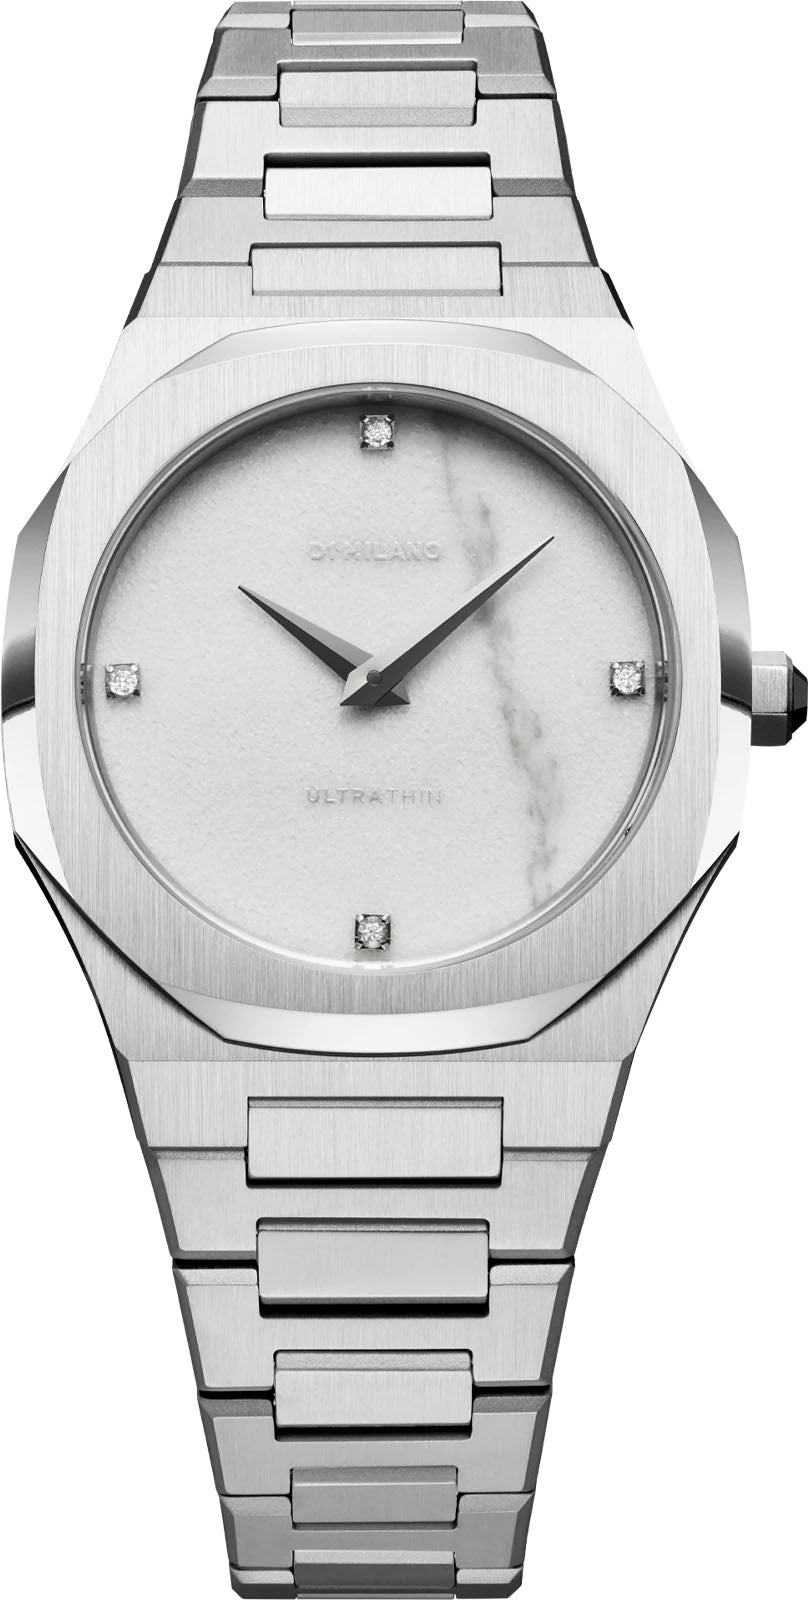 Photos - Wrist Watch D1 Milano Watch Ultra Thin Marble Silver - White DLM-113 